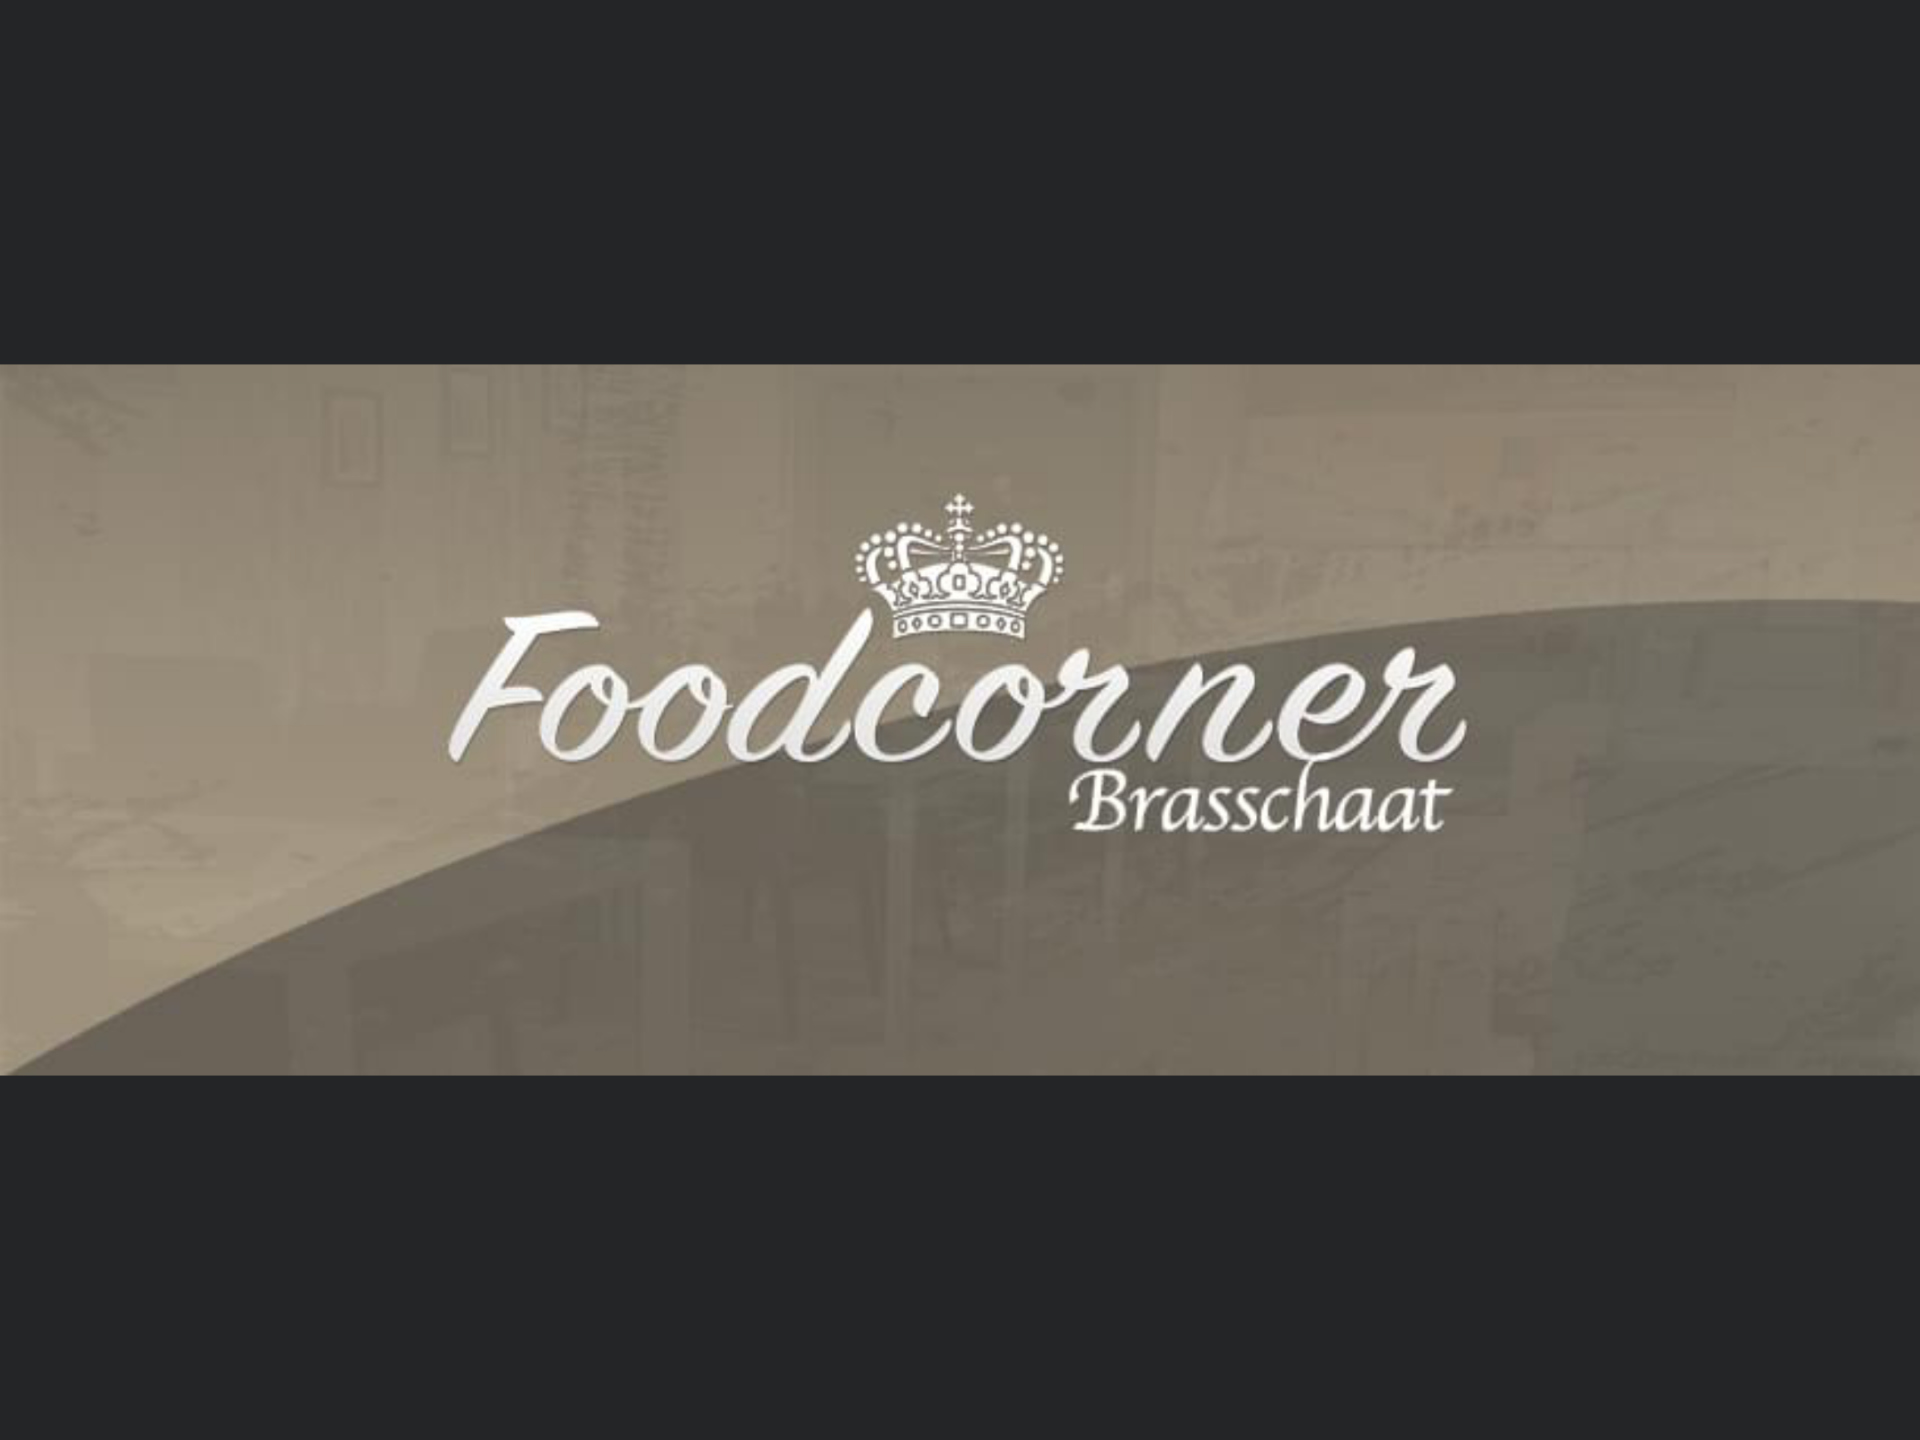 INK Foodcorner logo